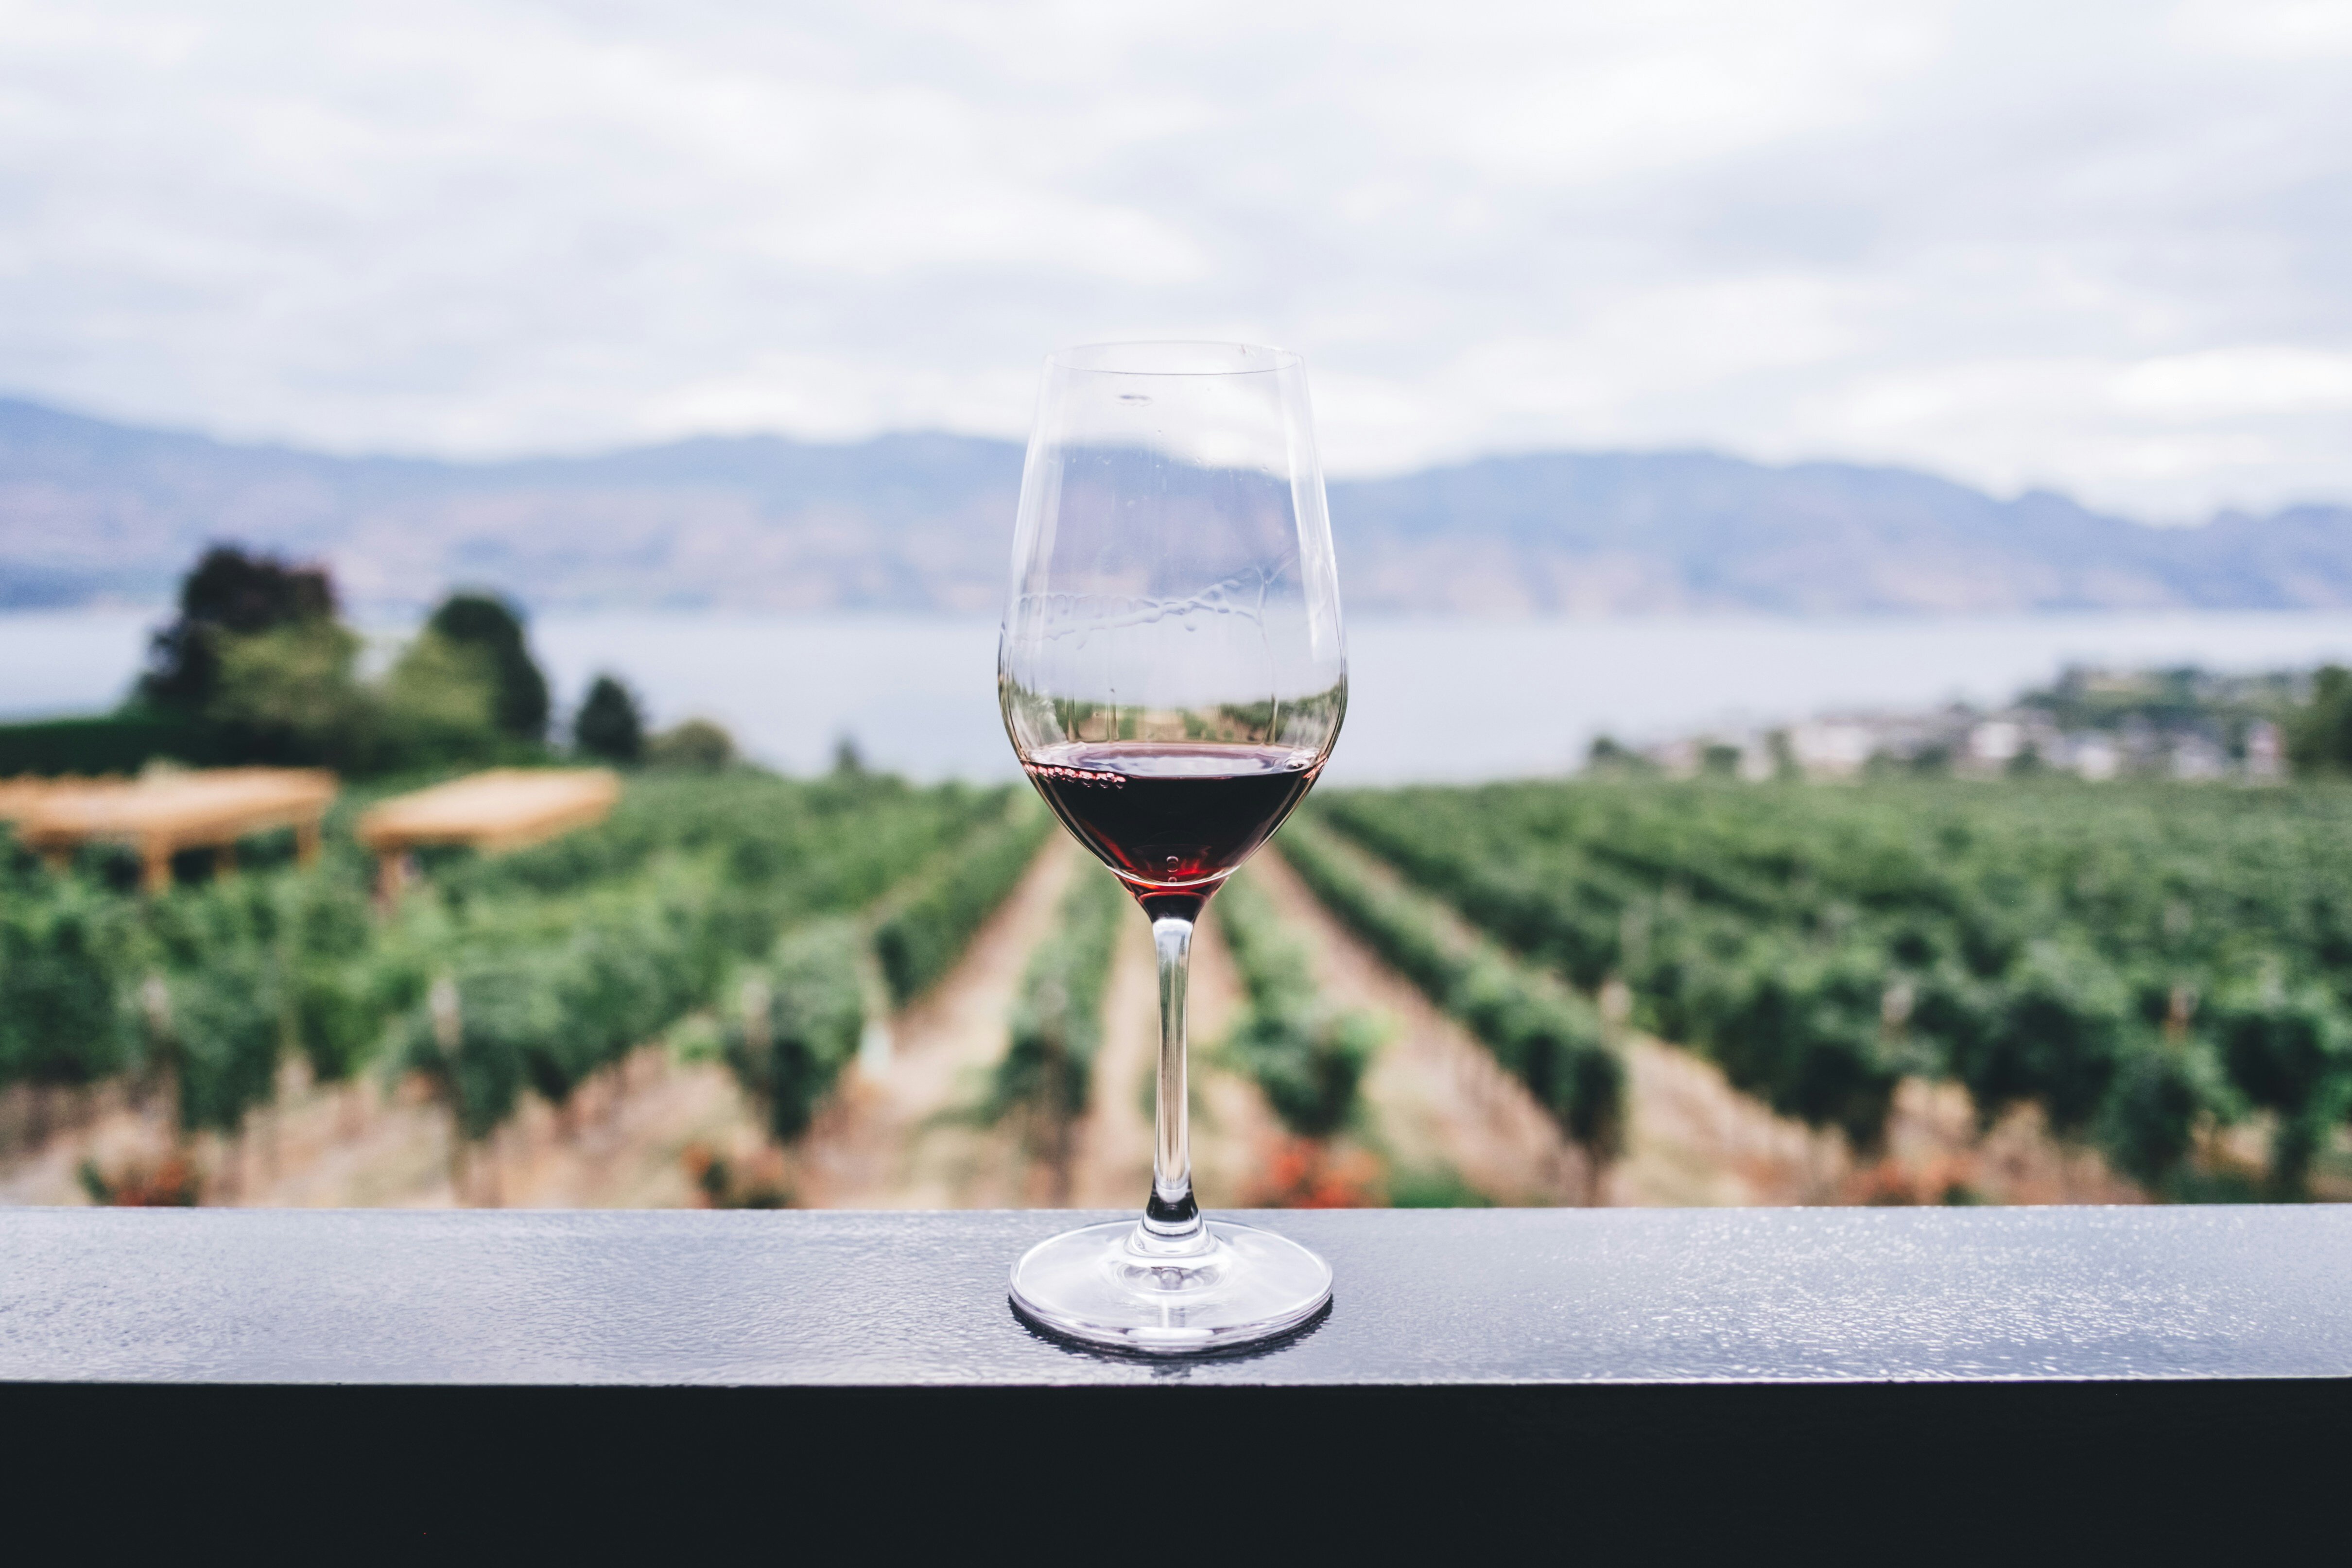 kym-ellis-unsplash-virginia winery and vineyards